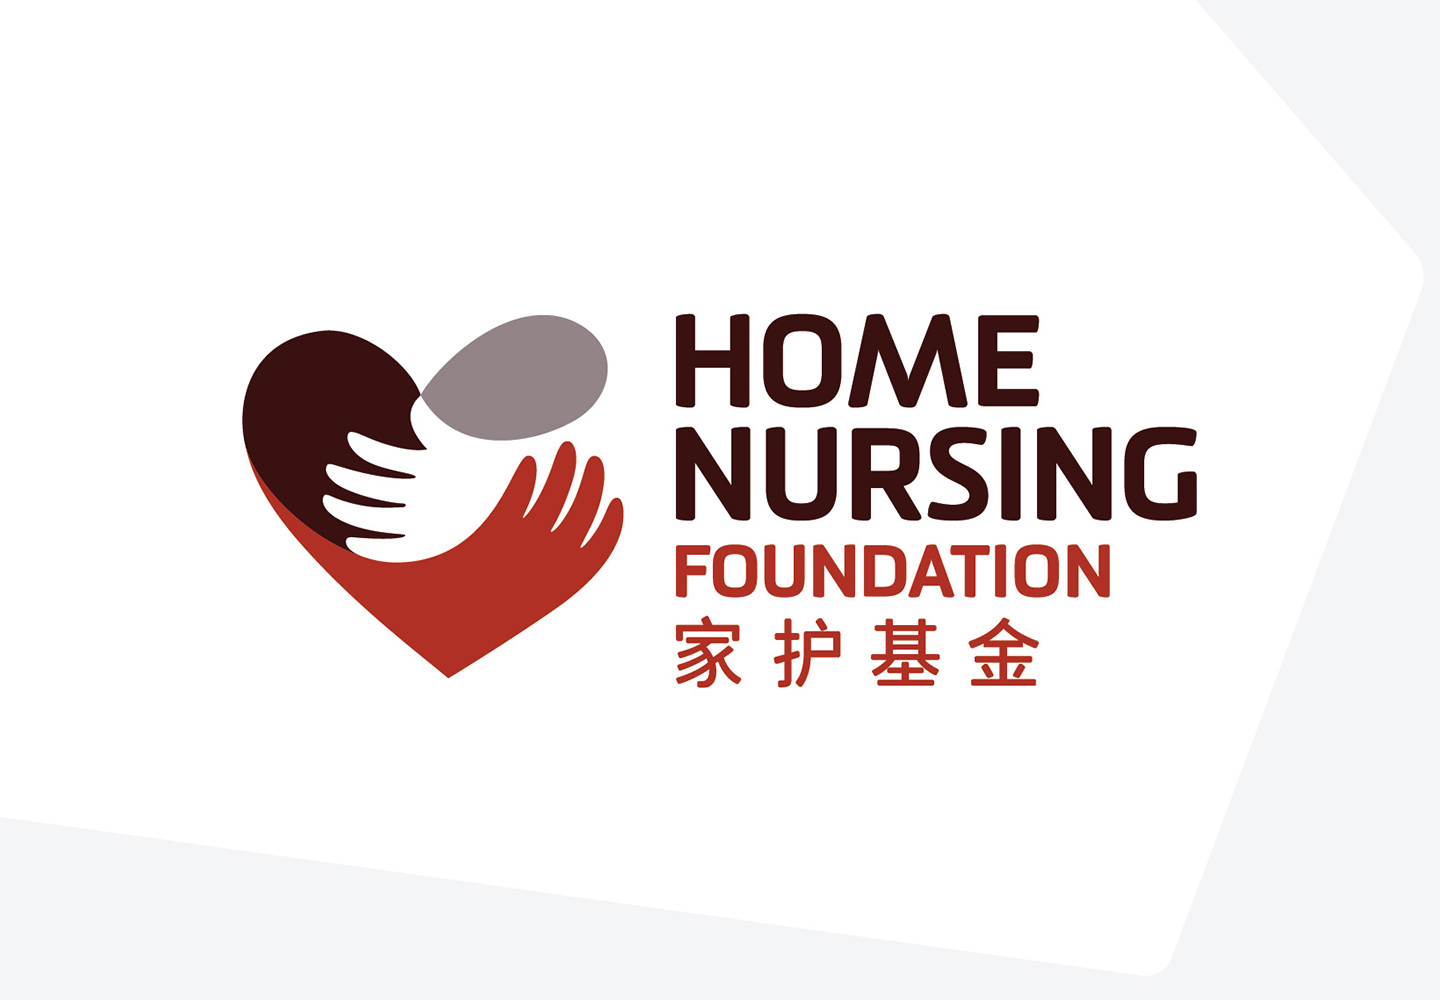 Brand Consultancy in Healthcare Industry. Logo design for Home Nursing Foundation